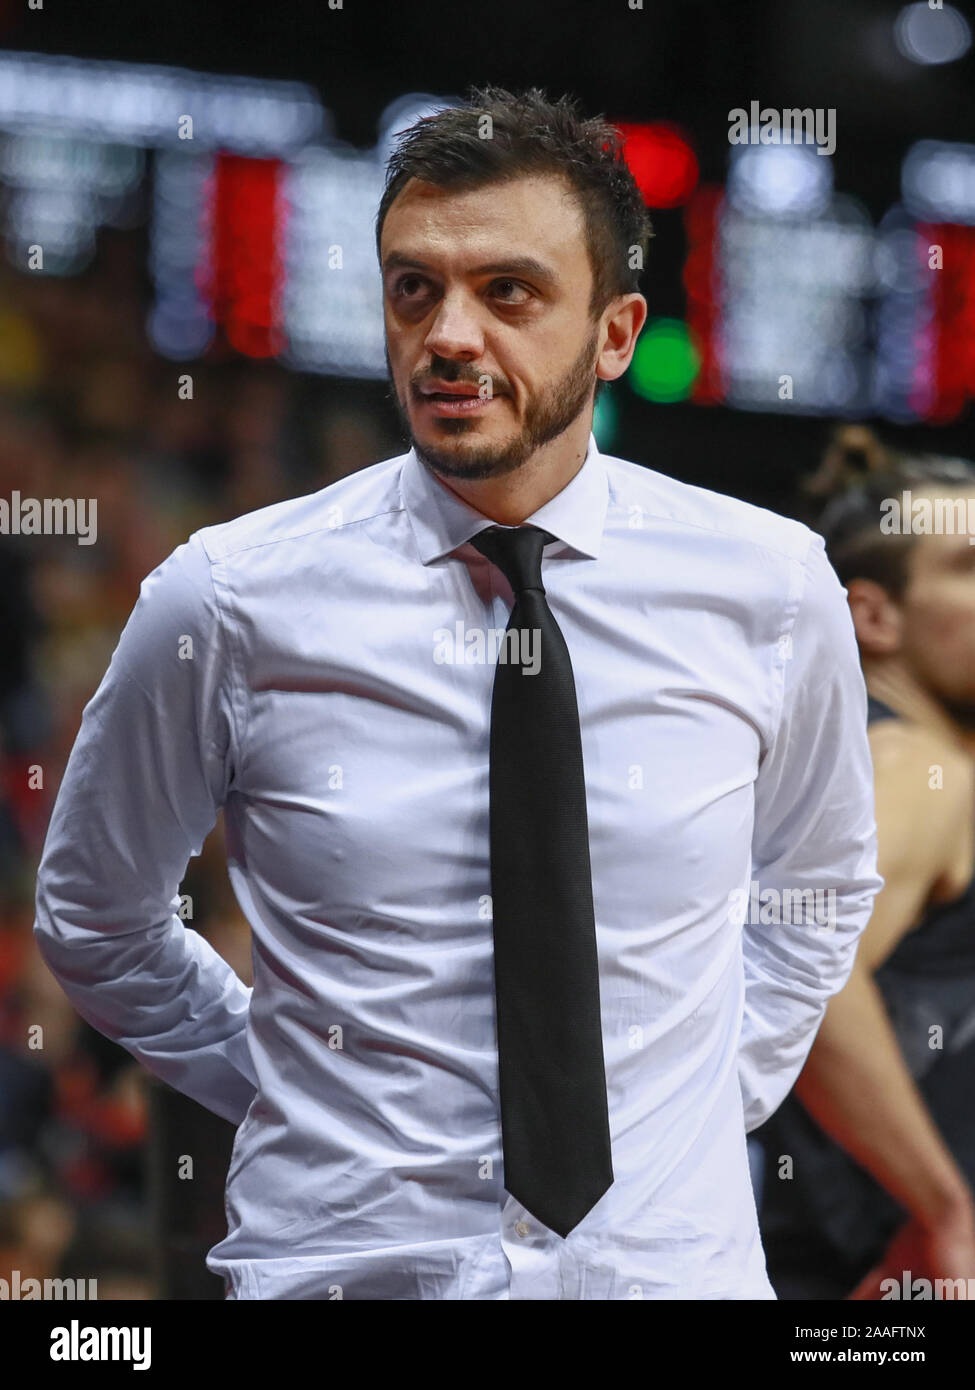 Oldenburg, Germany, November 20, 2019: Nicola Brienza, head coach of Aquila Basket Trento, during a Eurocup match at the Kleine EWE Arena. Stock Photo